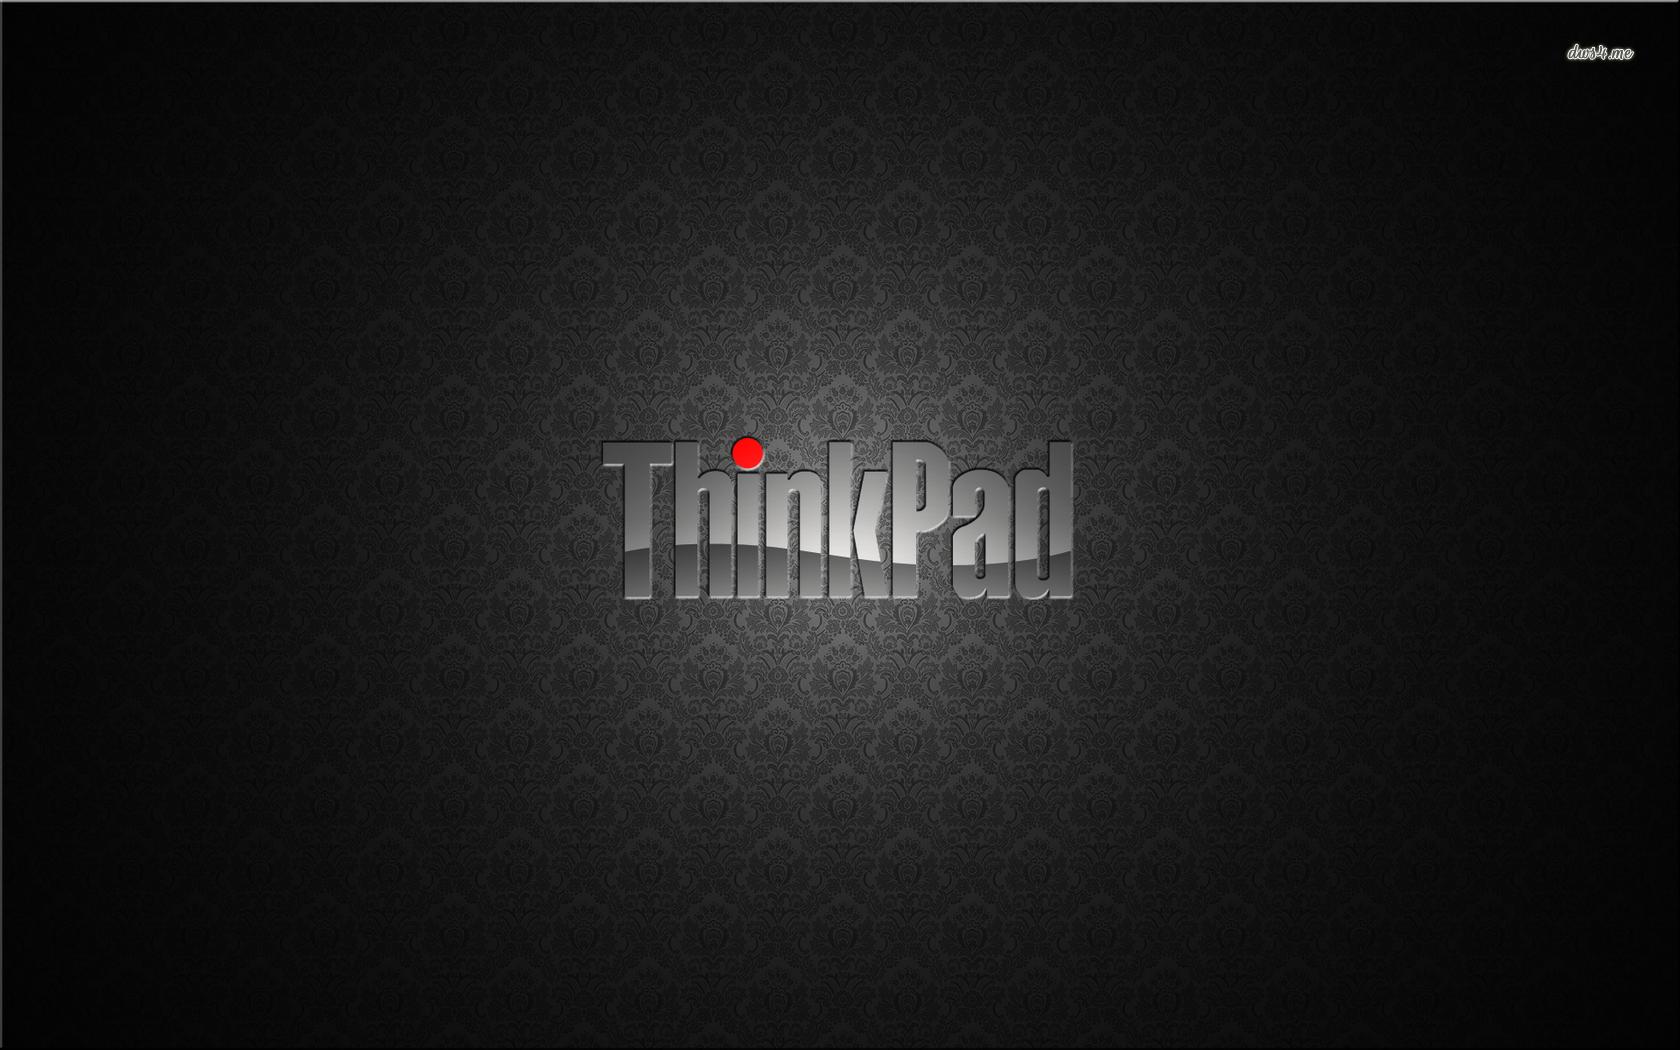 ThinkPad wallpaper wallpaper - #